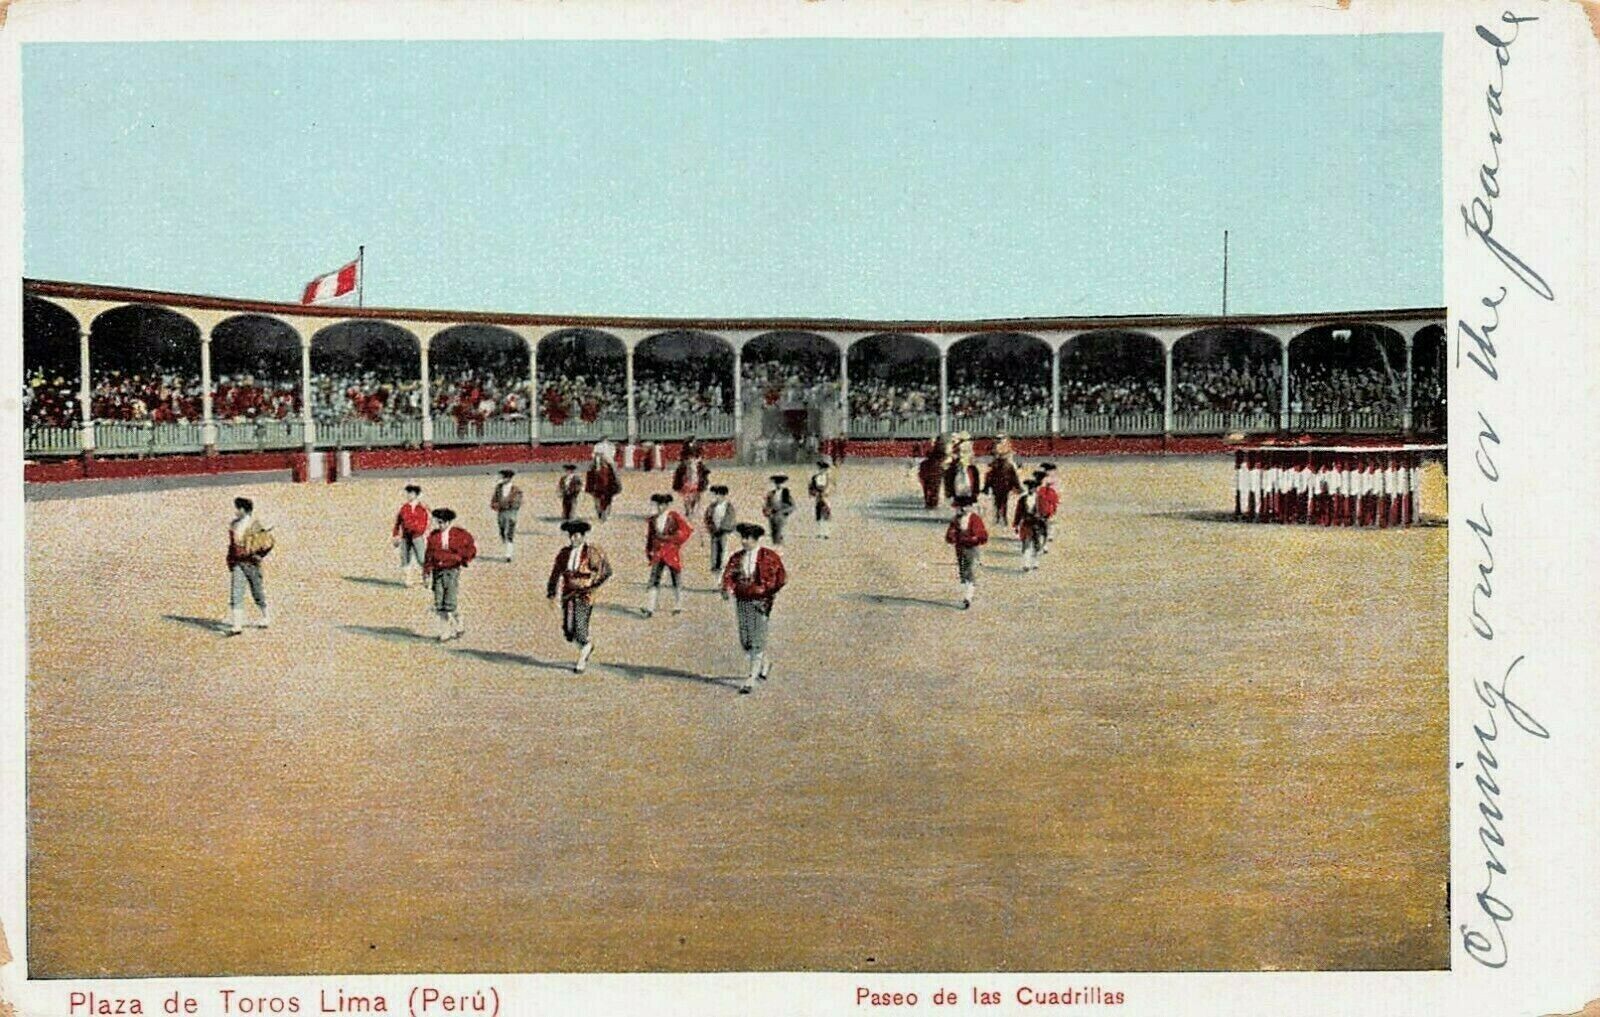 Plaza De Toros, Bull Fight Arena, Lima, Peru, Early Postcard, Used in 1910